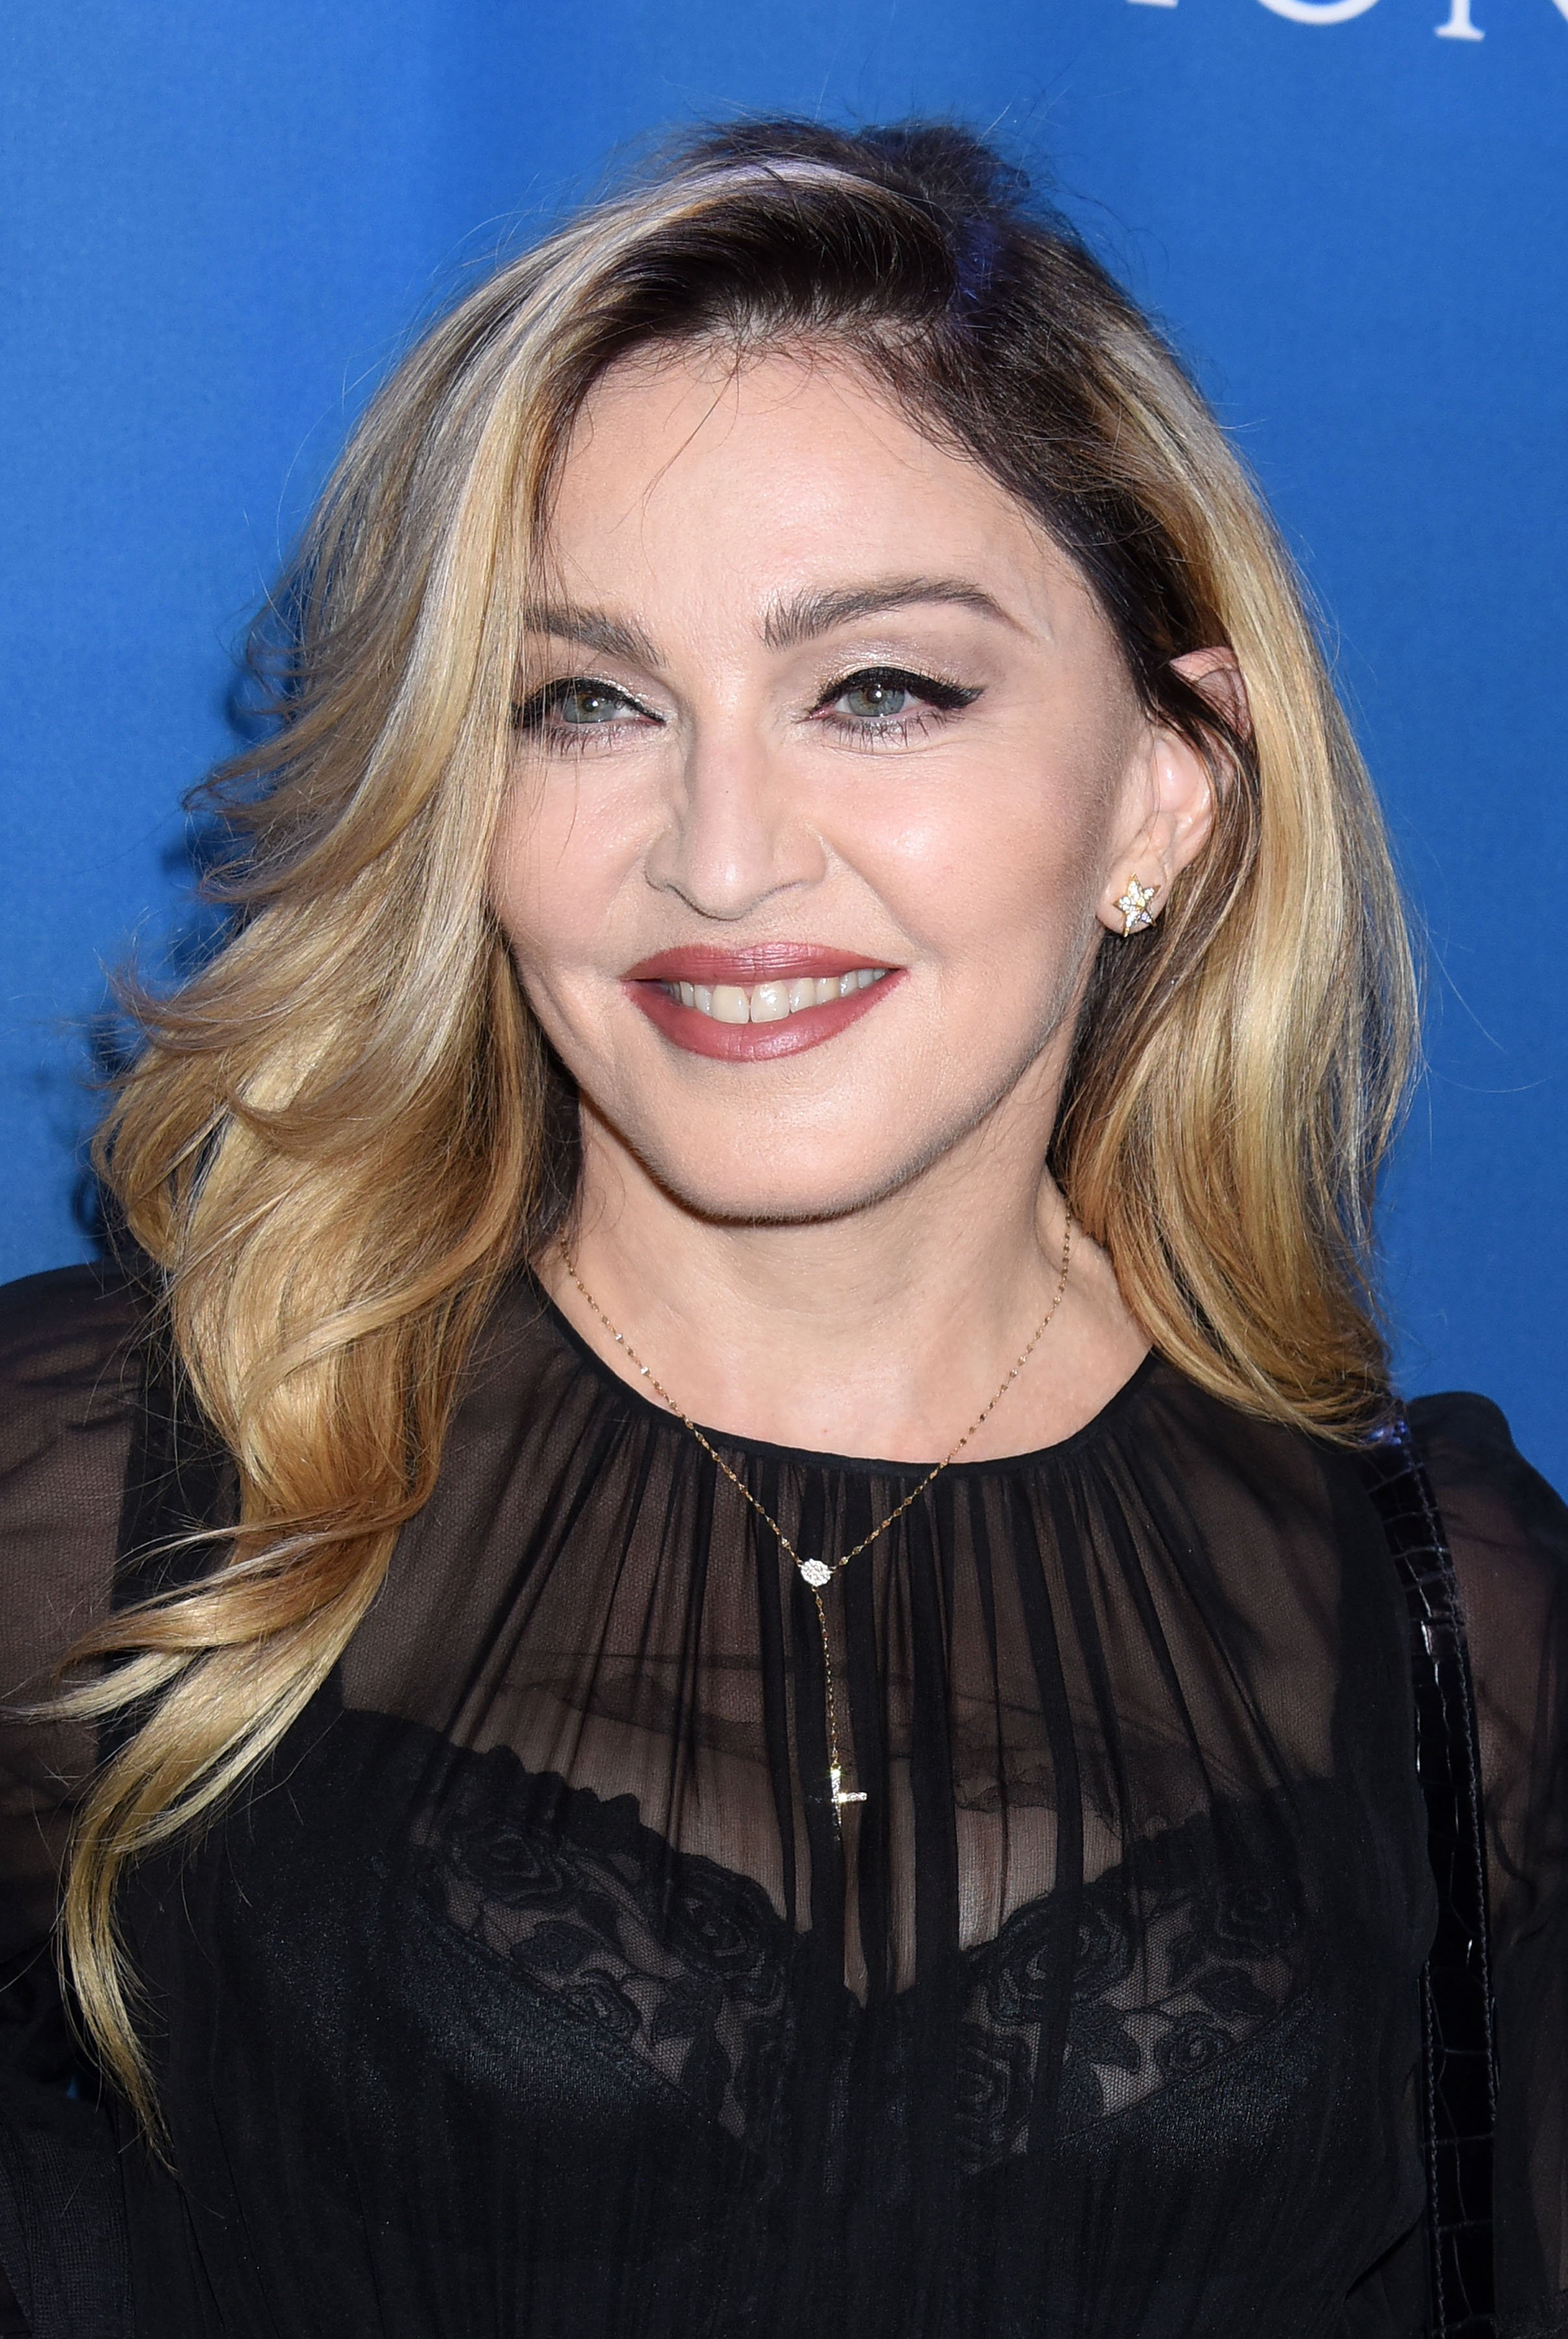 El crush impossible de Madonna era un espanyol